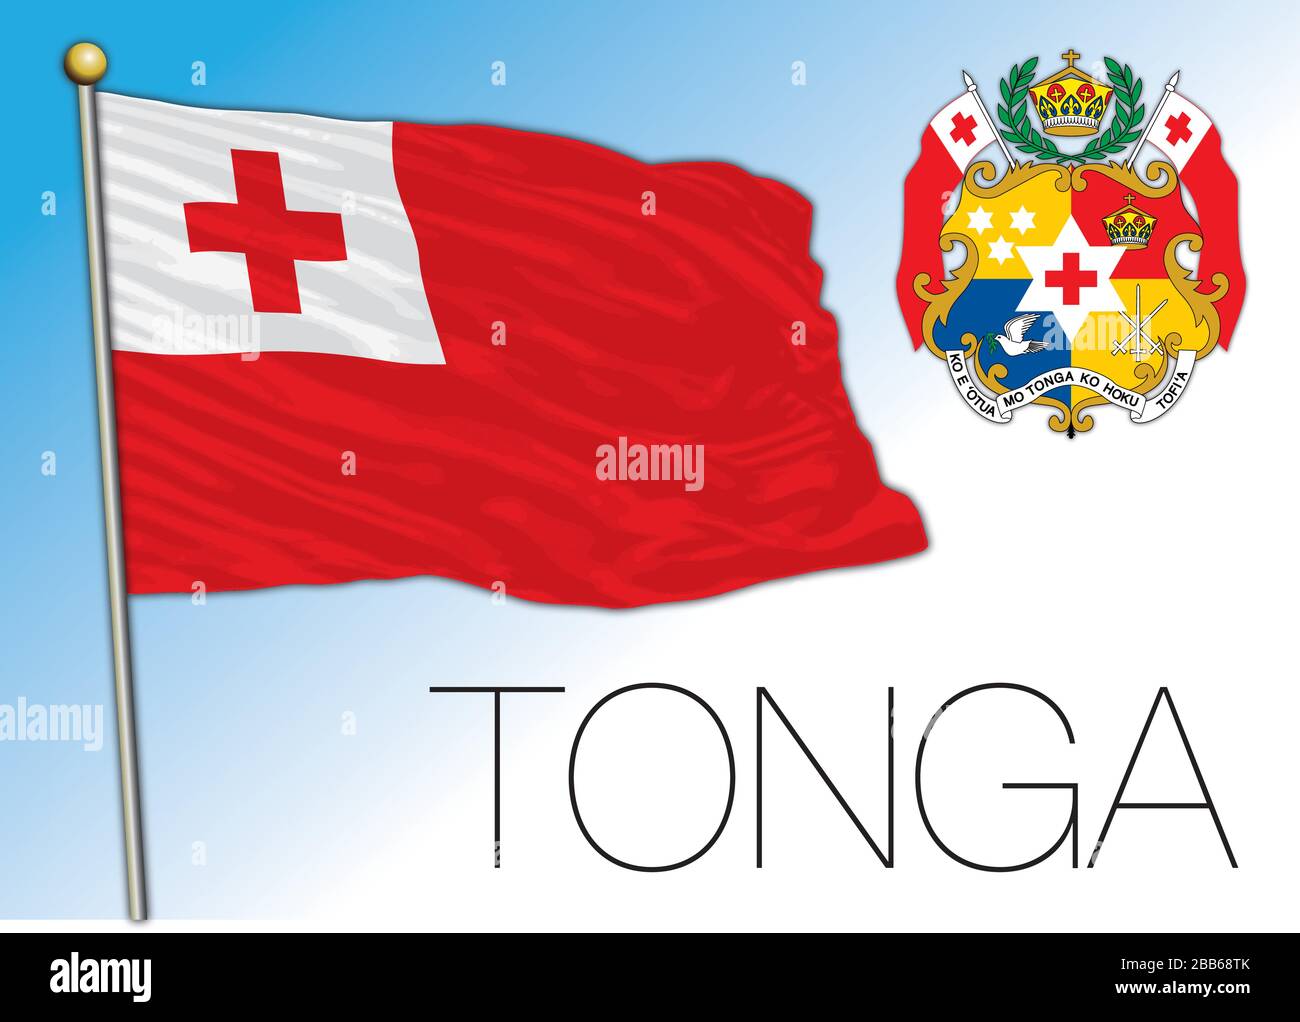 Official flag of tonga Banque d'images vectorielles - Alamy